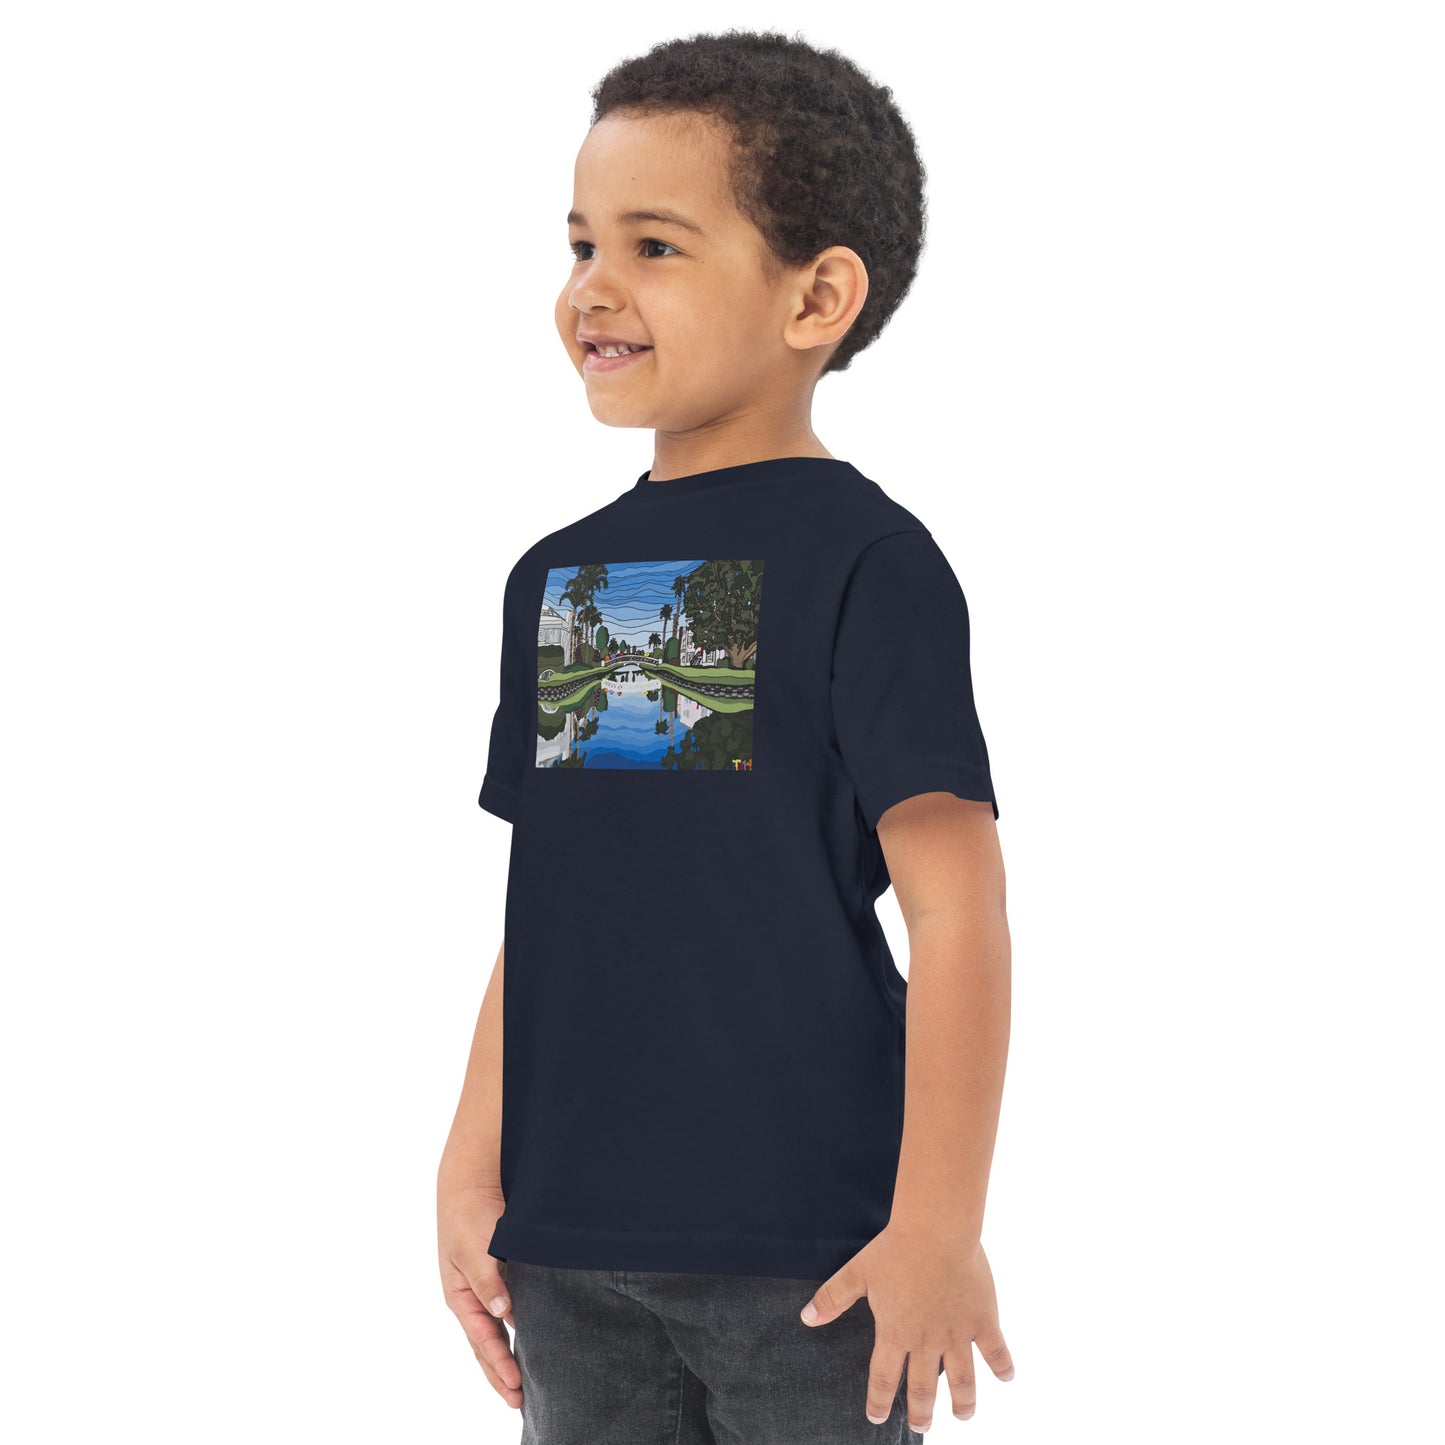 Venice Canals 1 - Toddler jersey t-shirt